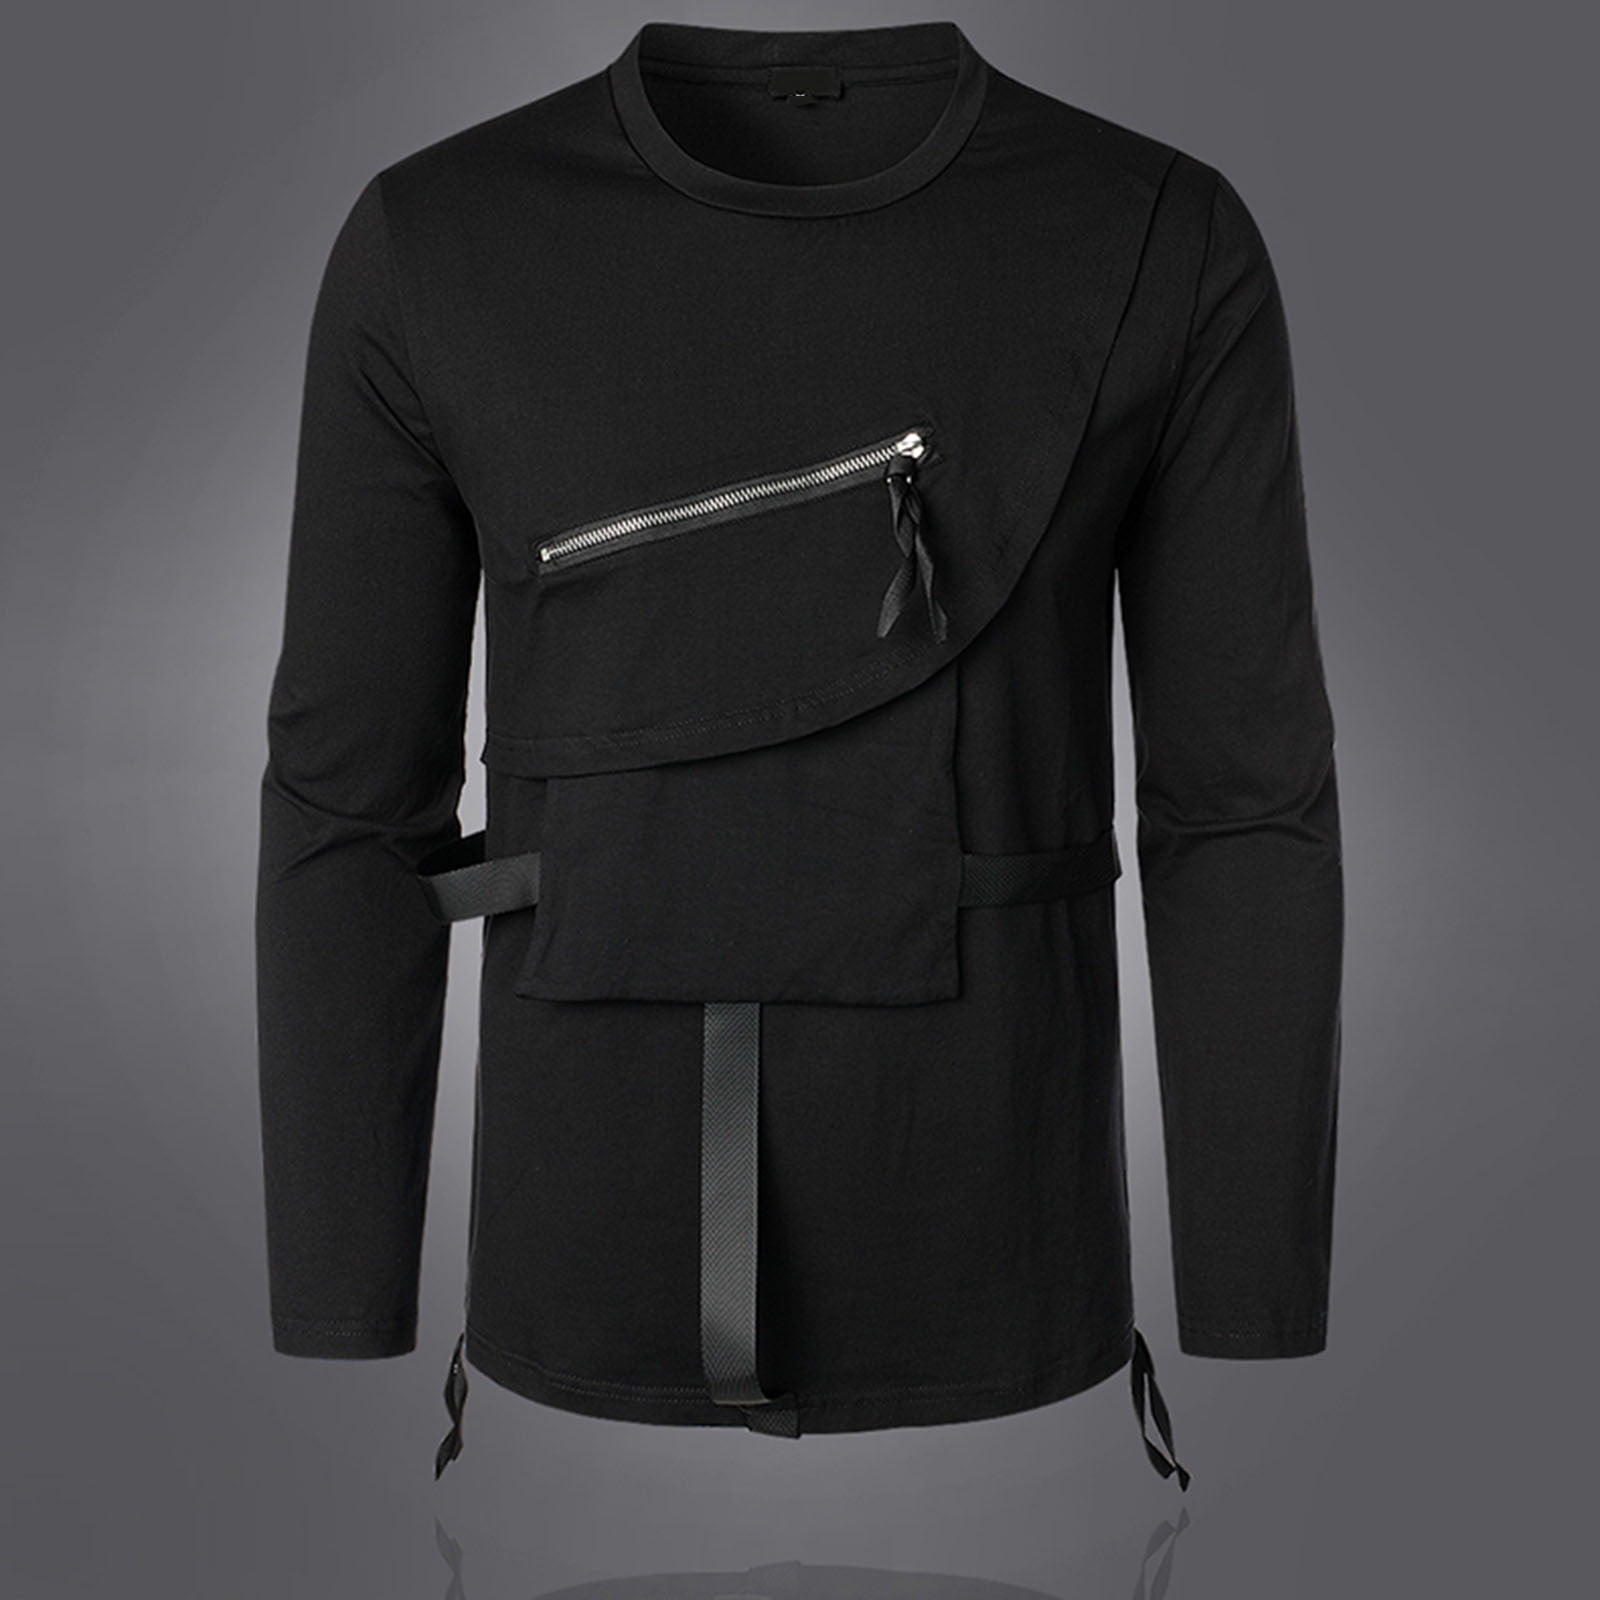 JSGEK Sales Men's Black Style Shirts Long Sleeve Scoop Neck Zipper Pocket  Punk T-Shirt for Men Long Ties Fashion Blouse Tops Black M - Walmart.com